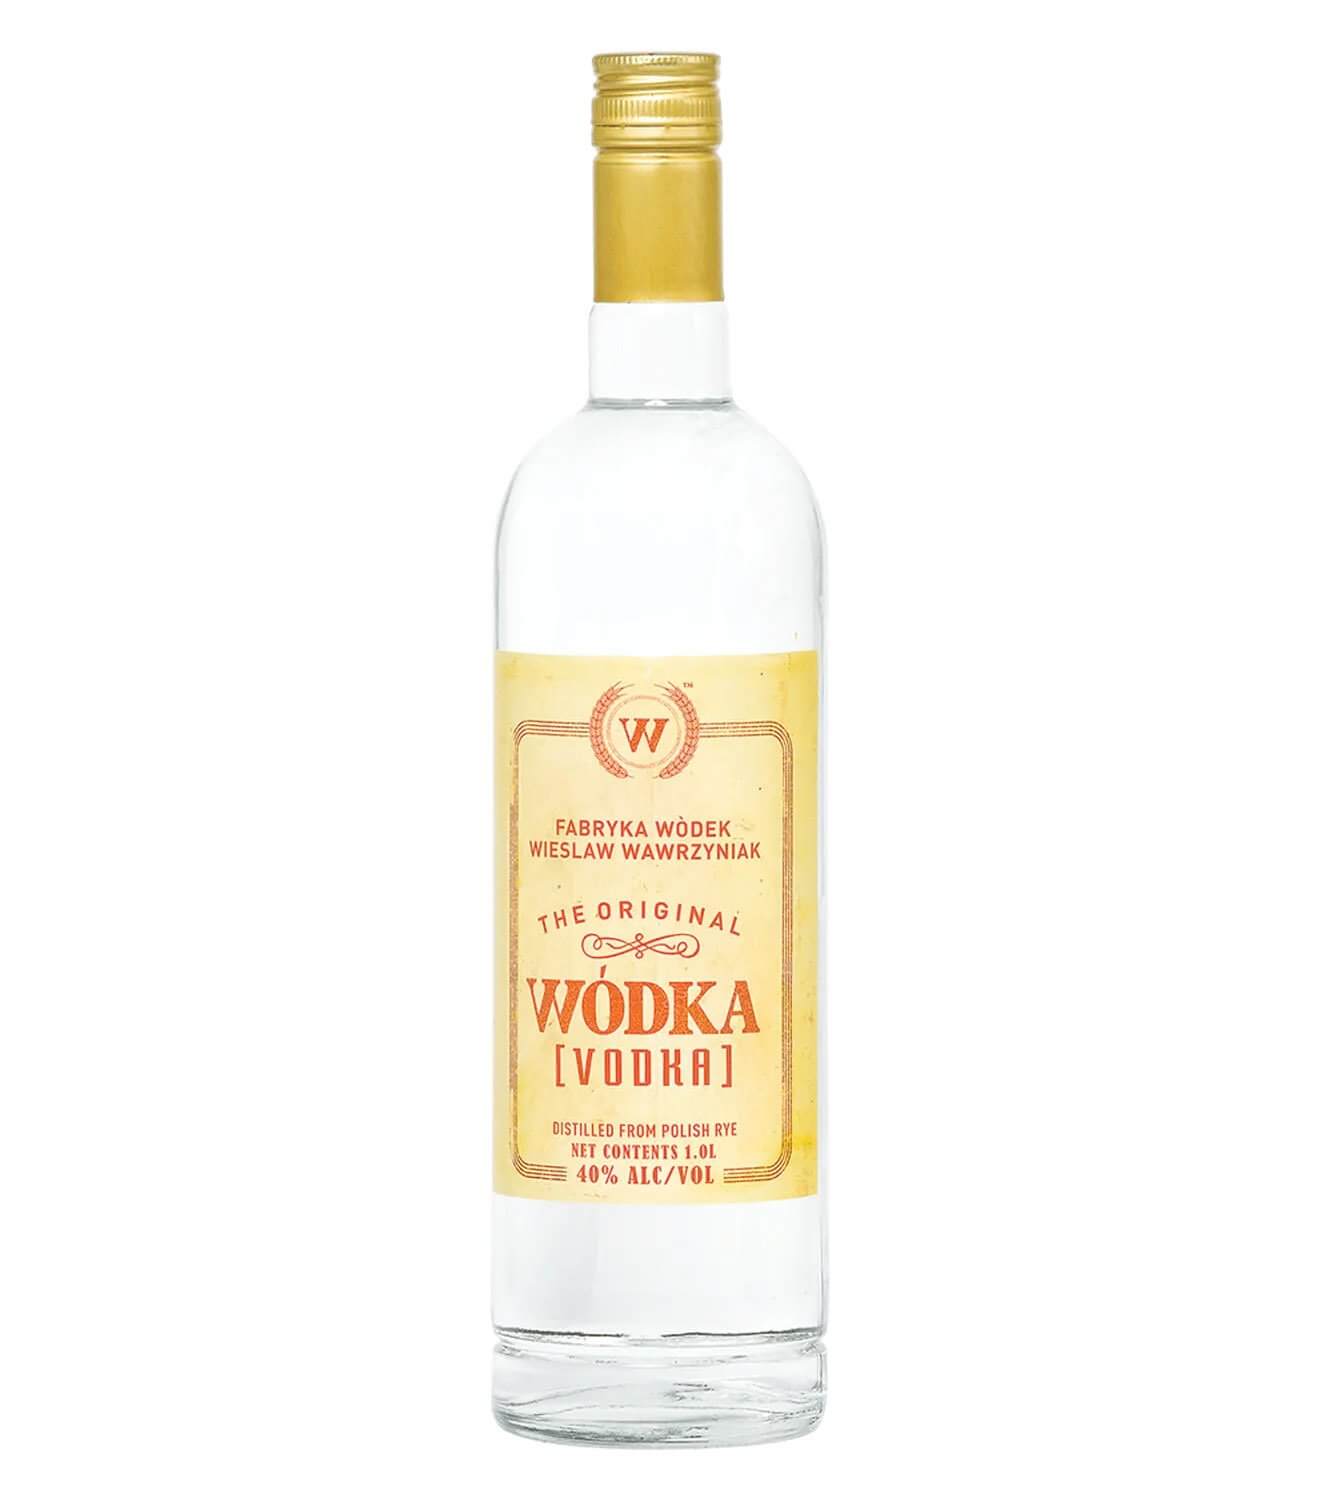 Bottle of Wódka Vodka, showcasing its clean and classic design.